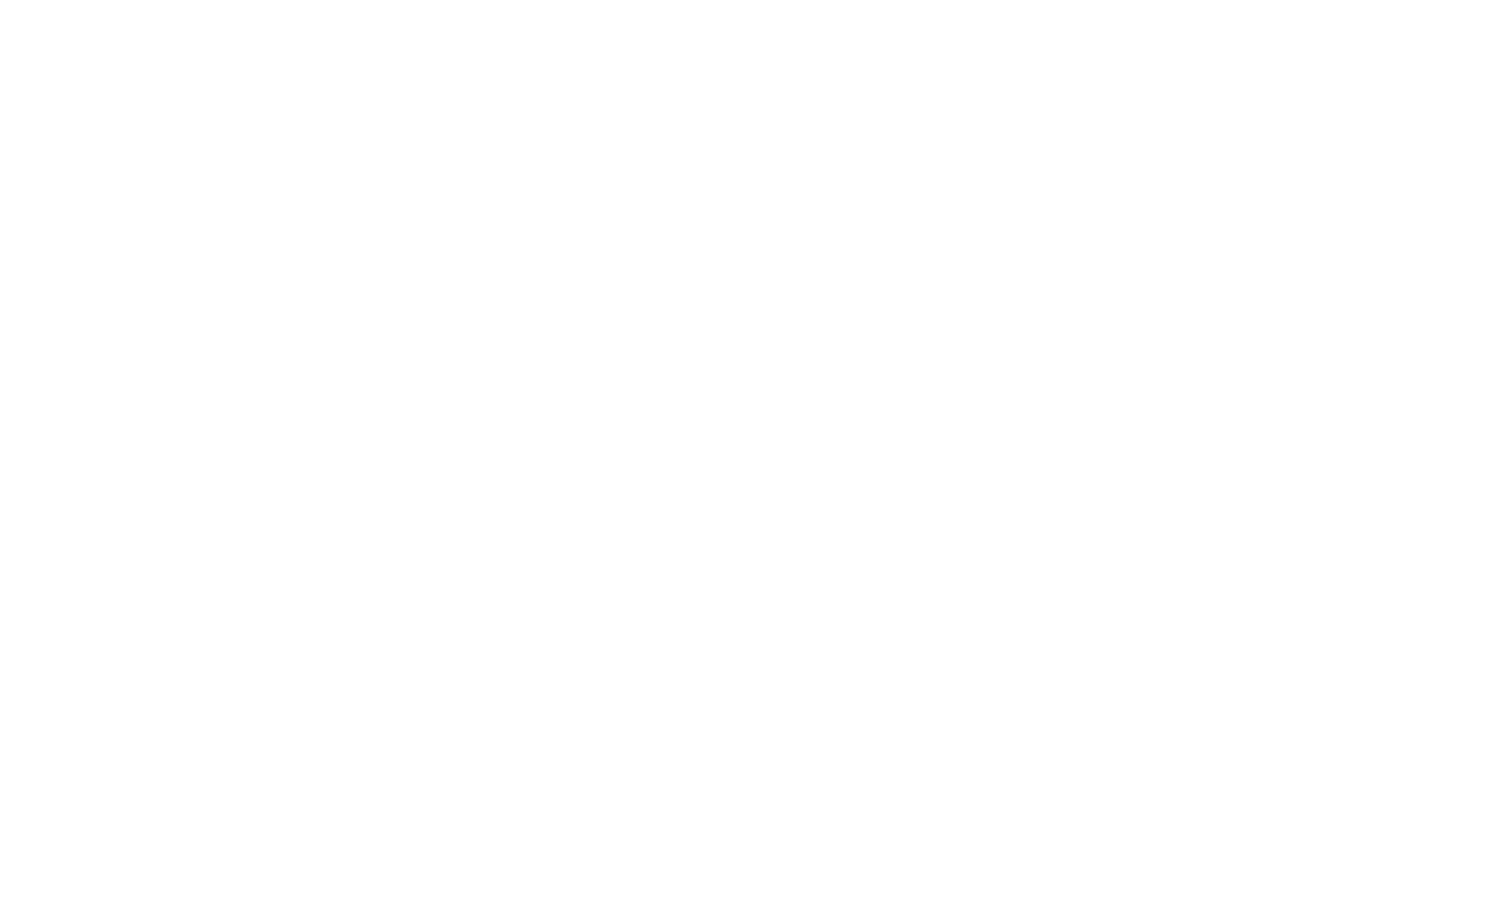 https://votemikefrance.com/wp-content/uploads/2021/03/whitefrance_ct_logo_cmyk-cropped-1.png